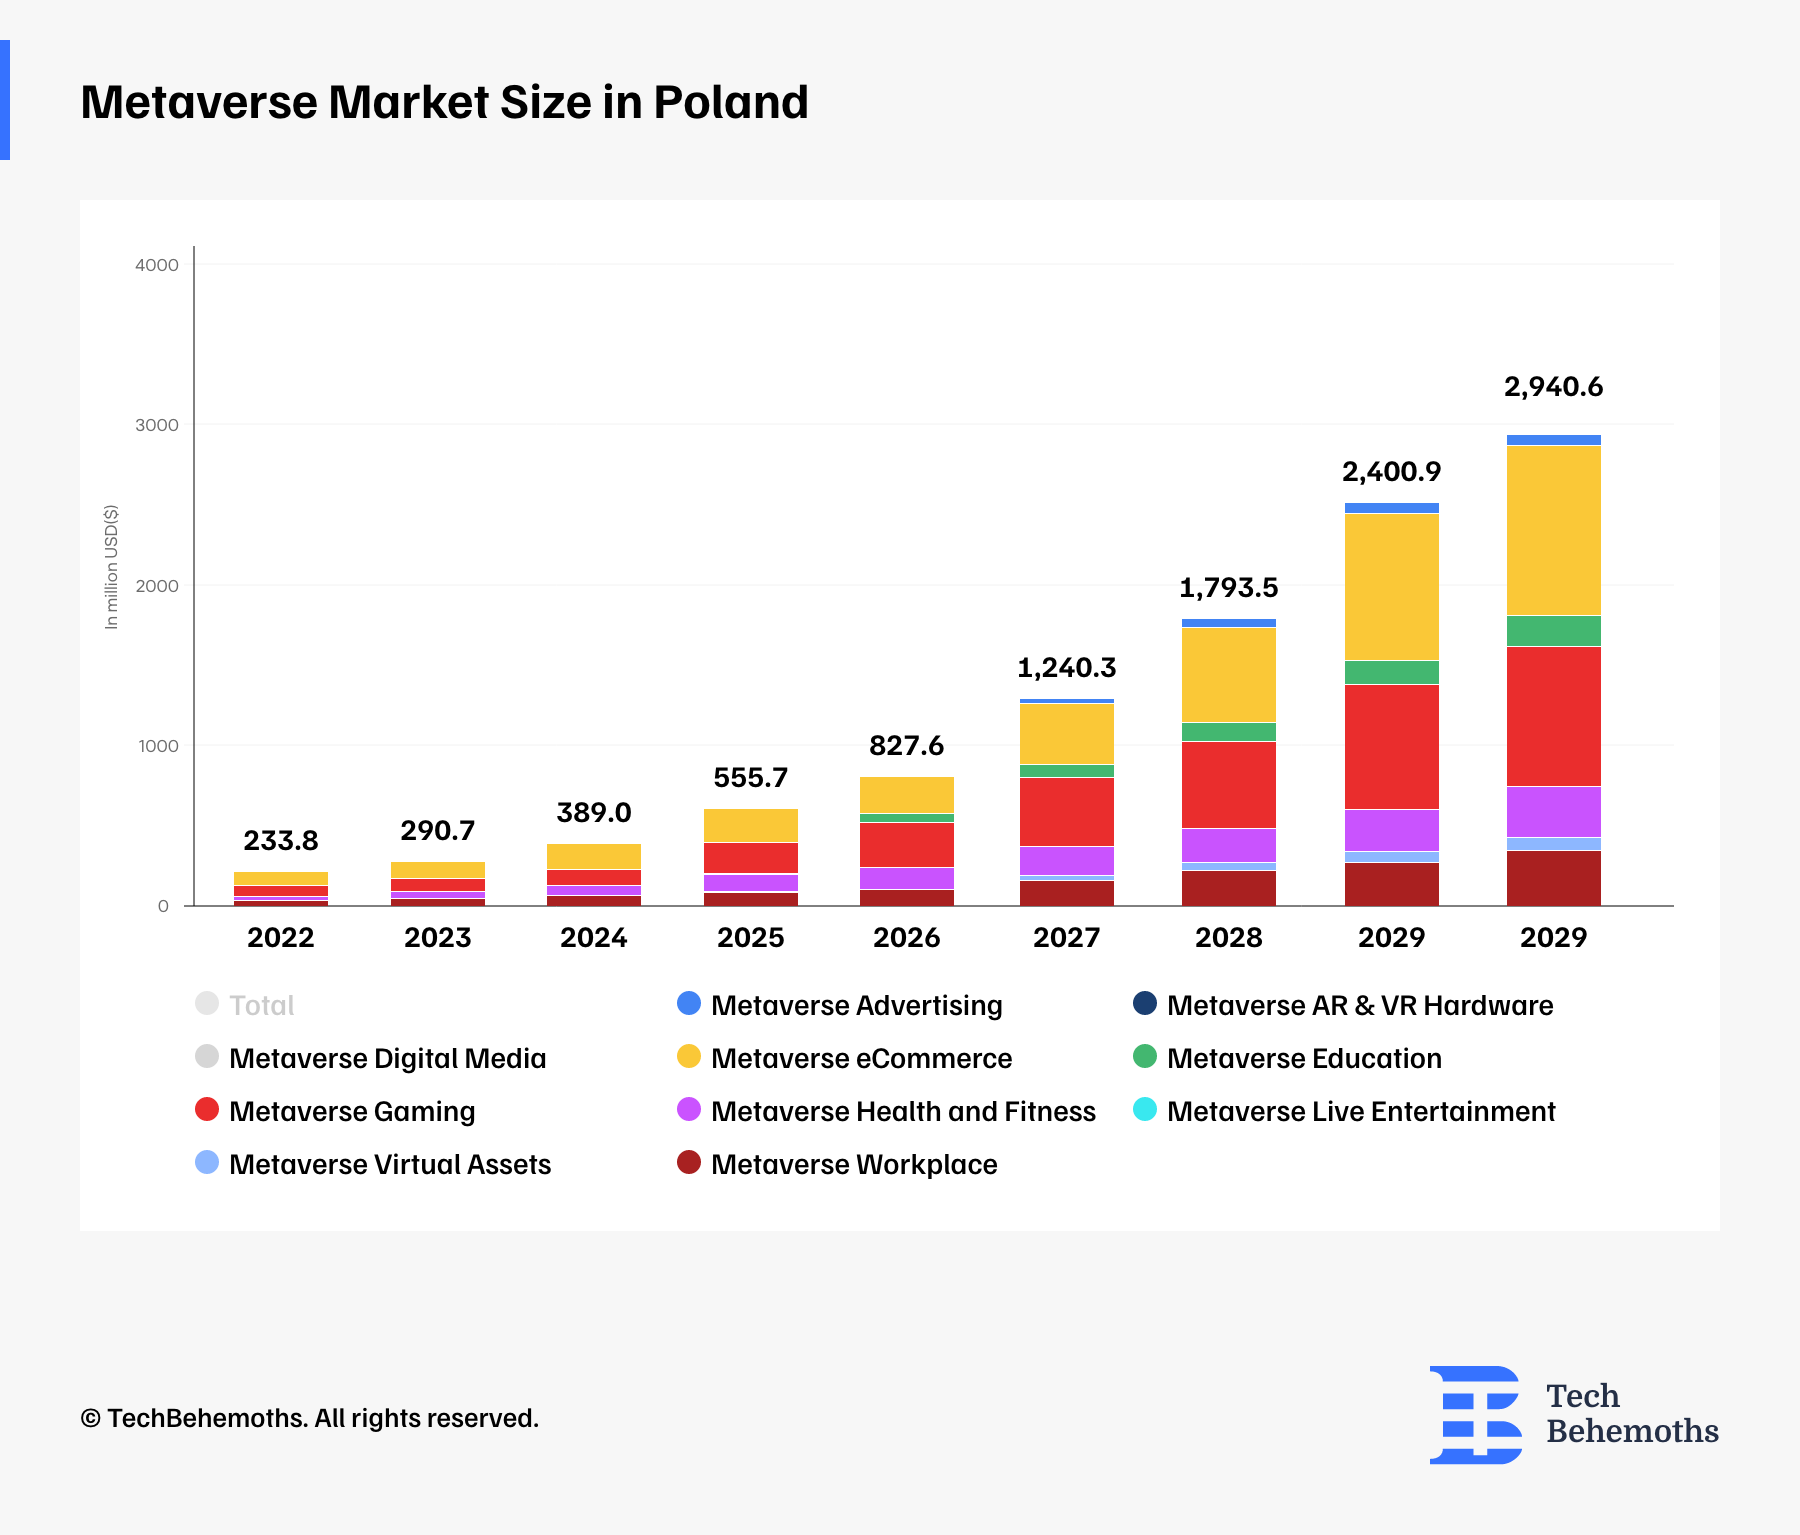 Metaverse Market Size in Poland